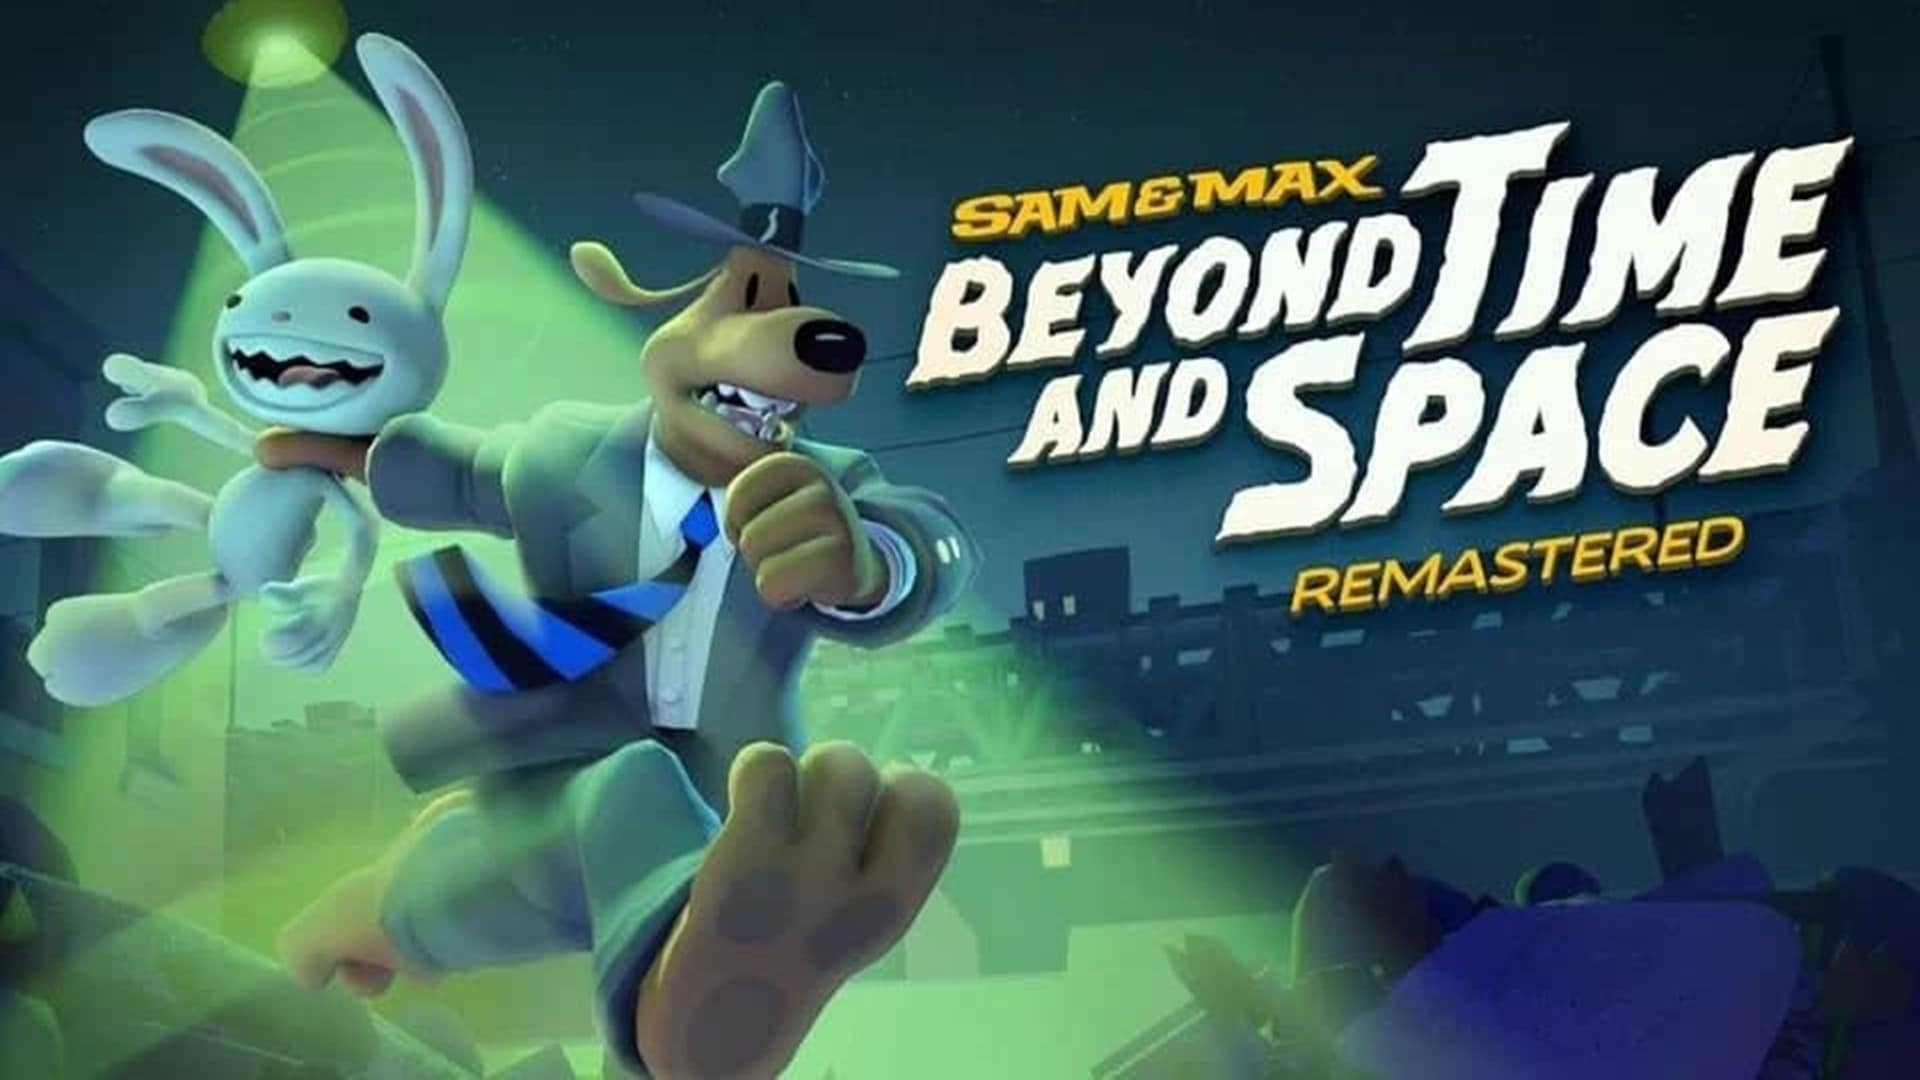 Sam and Max: Beyond Time and Space se está remasterizando, GamersRD